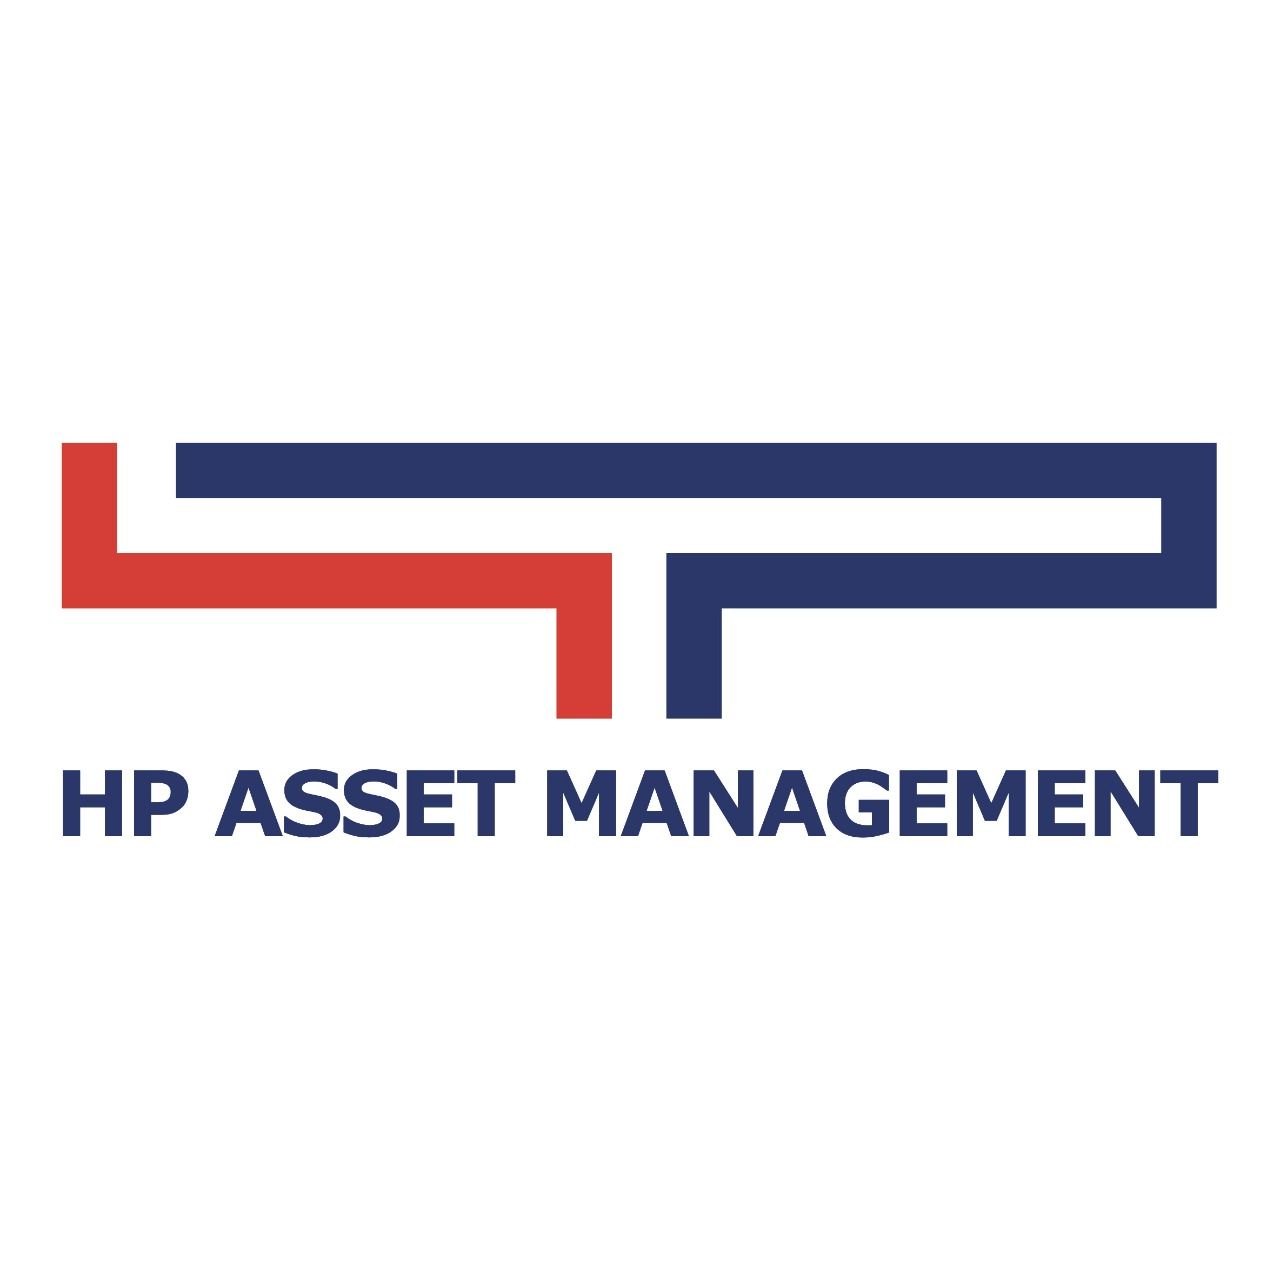 PT. Henan Putihrai Asset Management